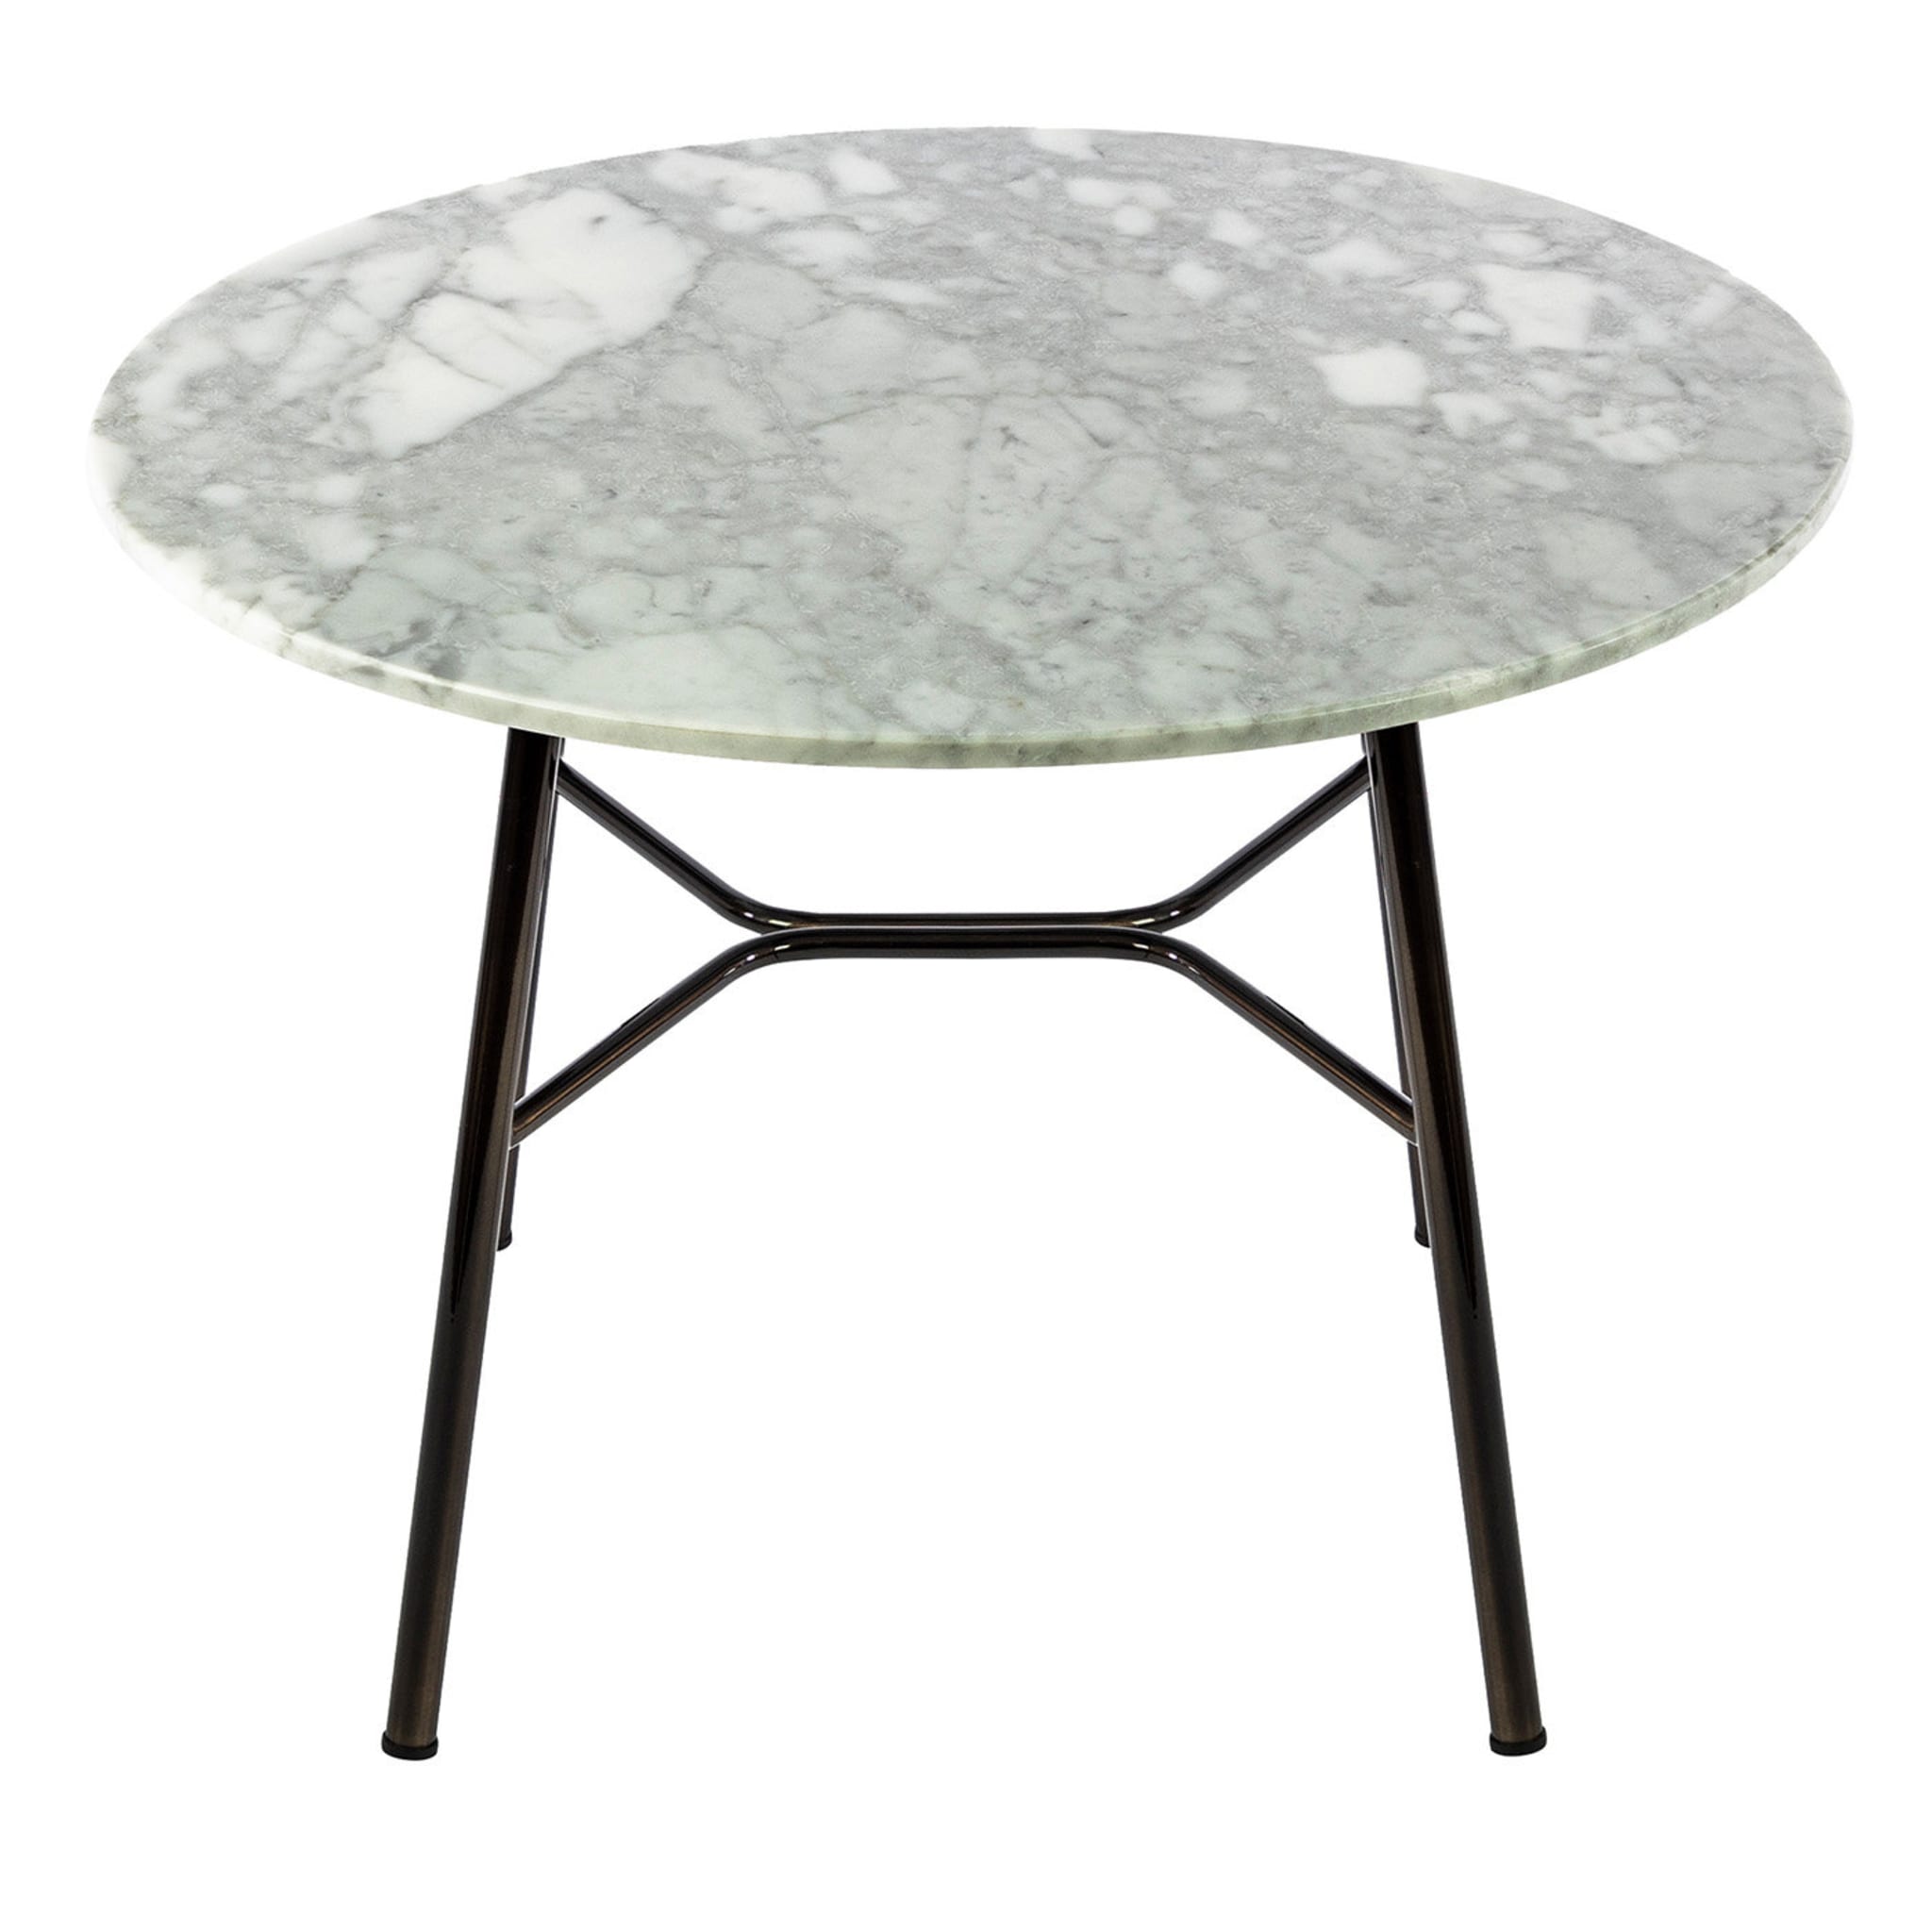 Yuki Round Side Table with White Carrara Top # 1 by Ep Studio - Main view